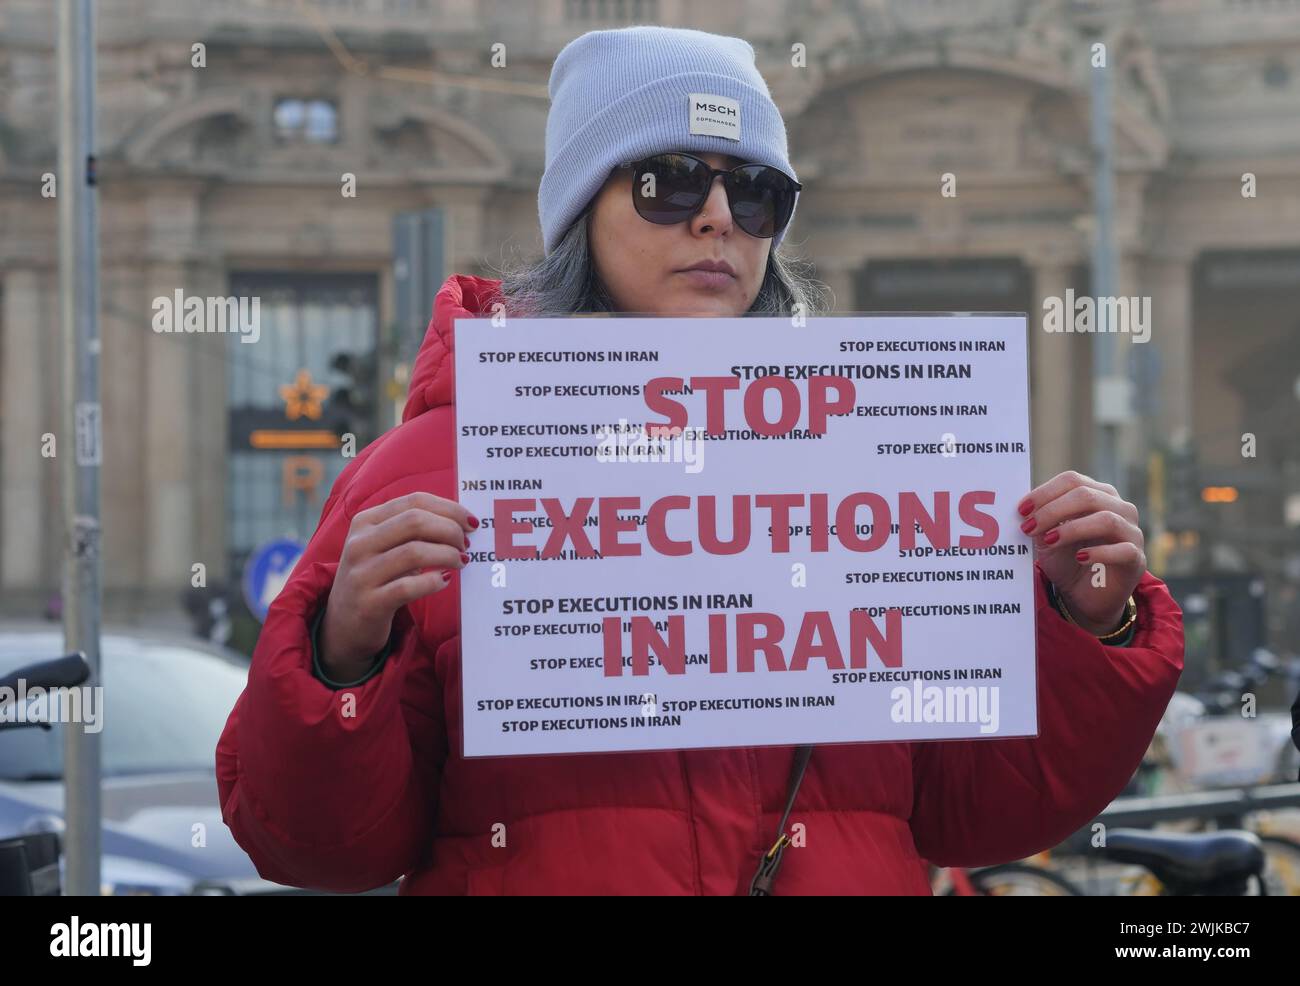 Protest by the Iranian community in Cordusio square for women's rights and Ali Khamenei scheme. Stock Photo